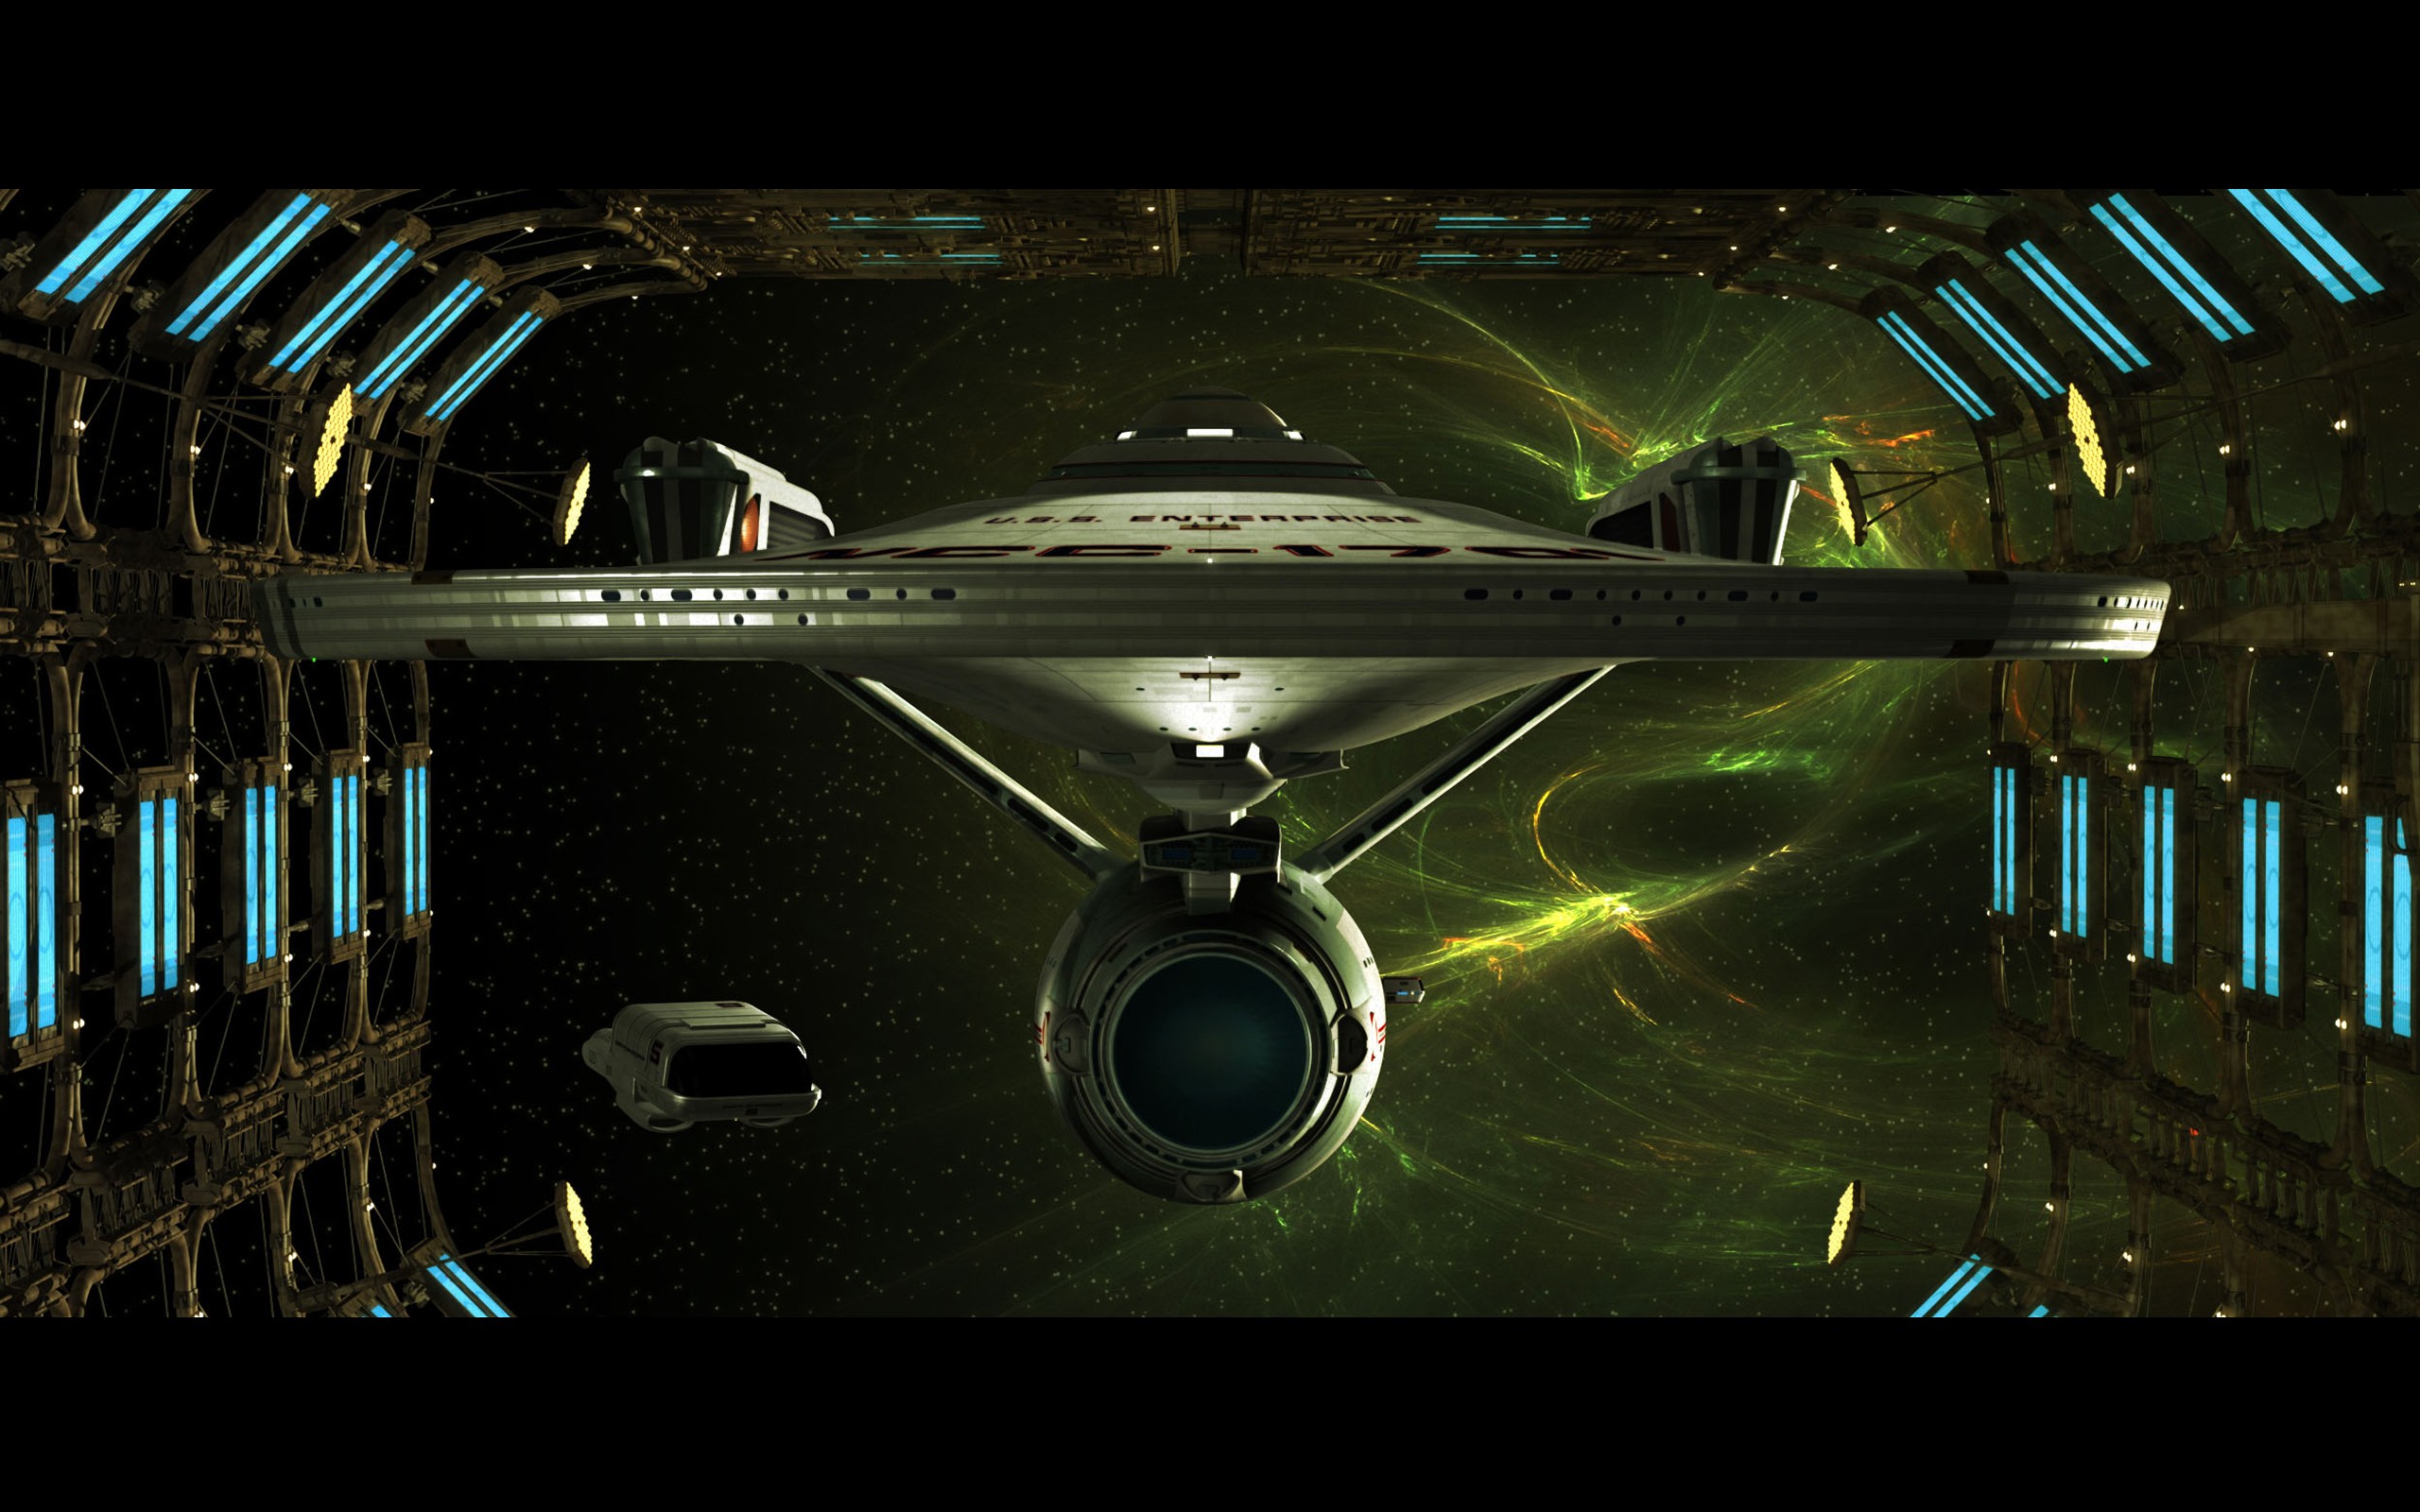 General 2560x1600 Star Trek USS Enterprise NCC-1701 spaceship ncc-1701 Spacedock Star Trek Ships vehicle science fiction